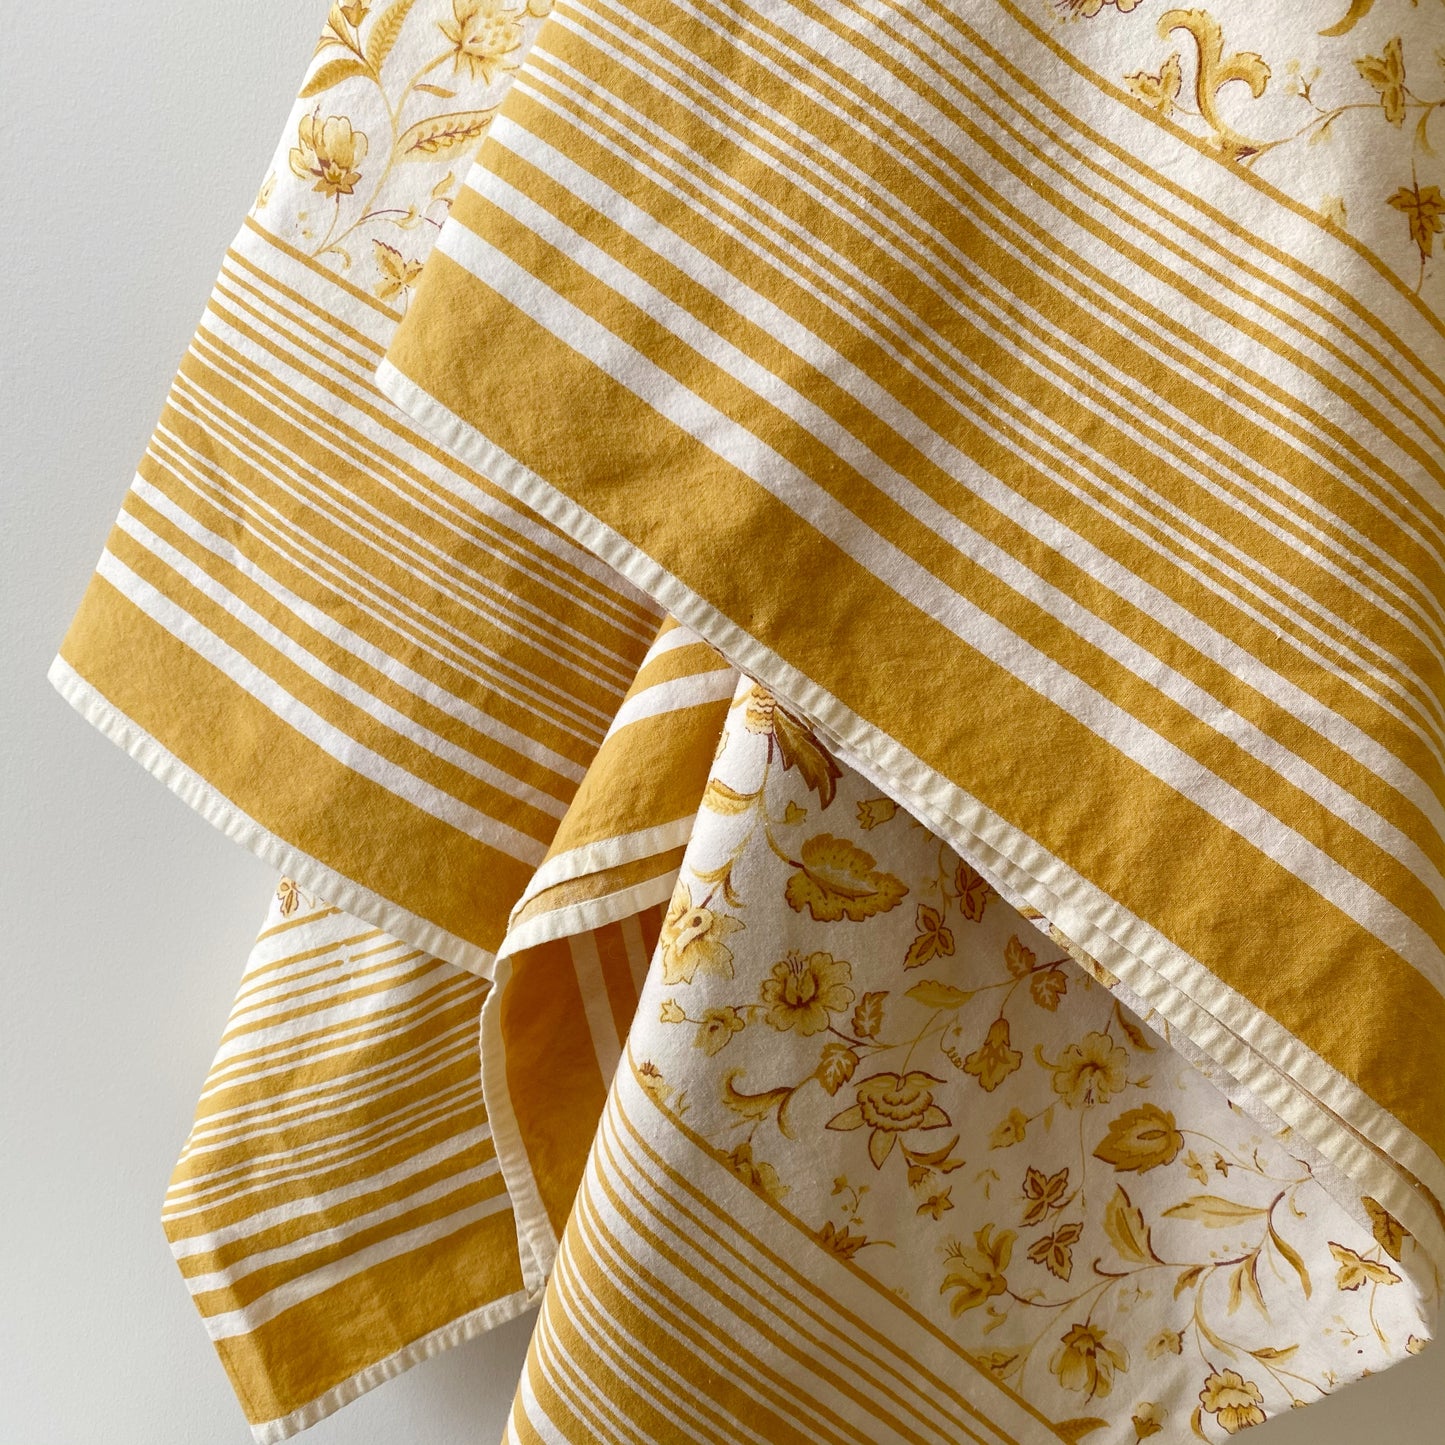 Vintage Yellow Floral Cotton Tablecloth (70 x 108)